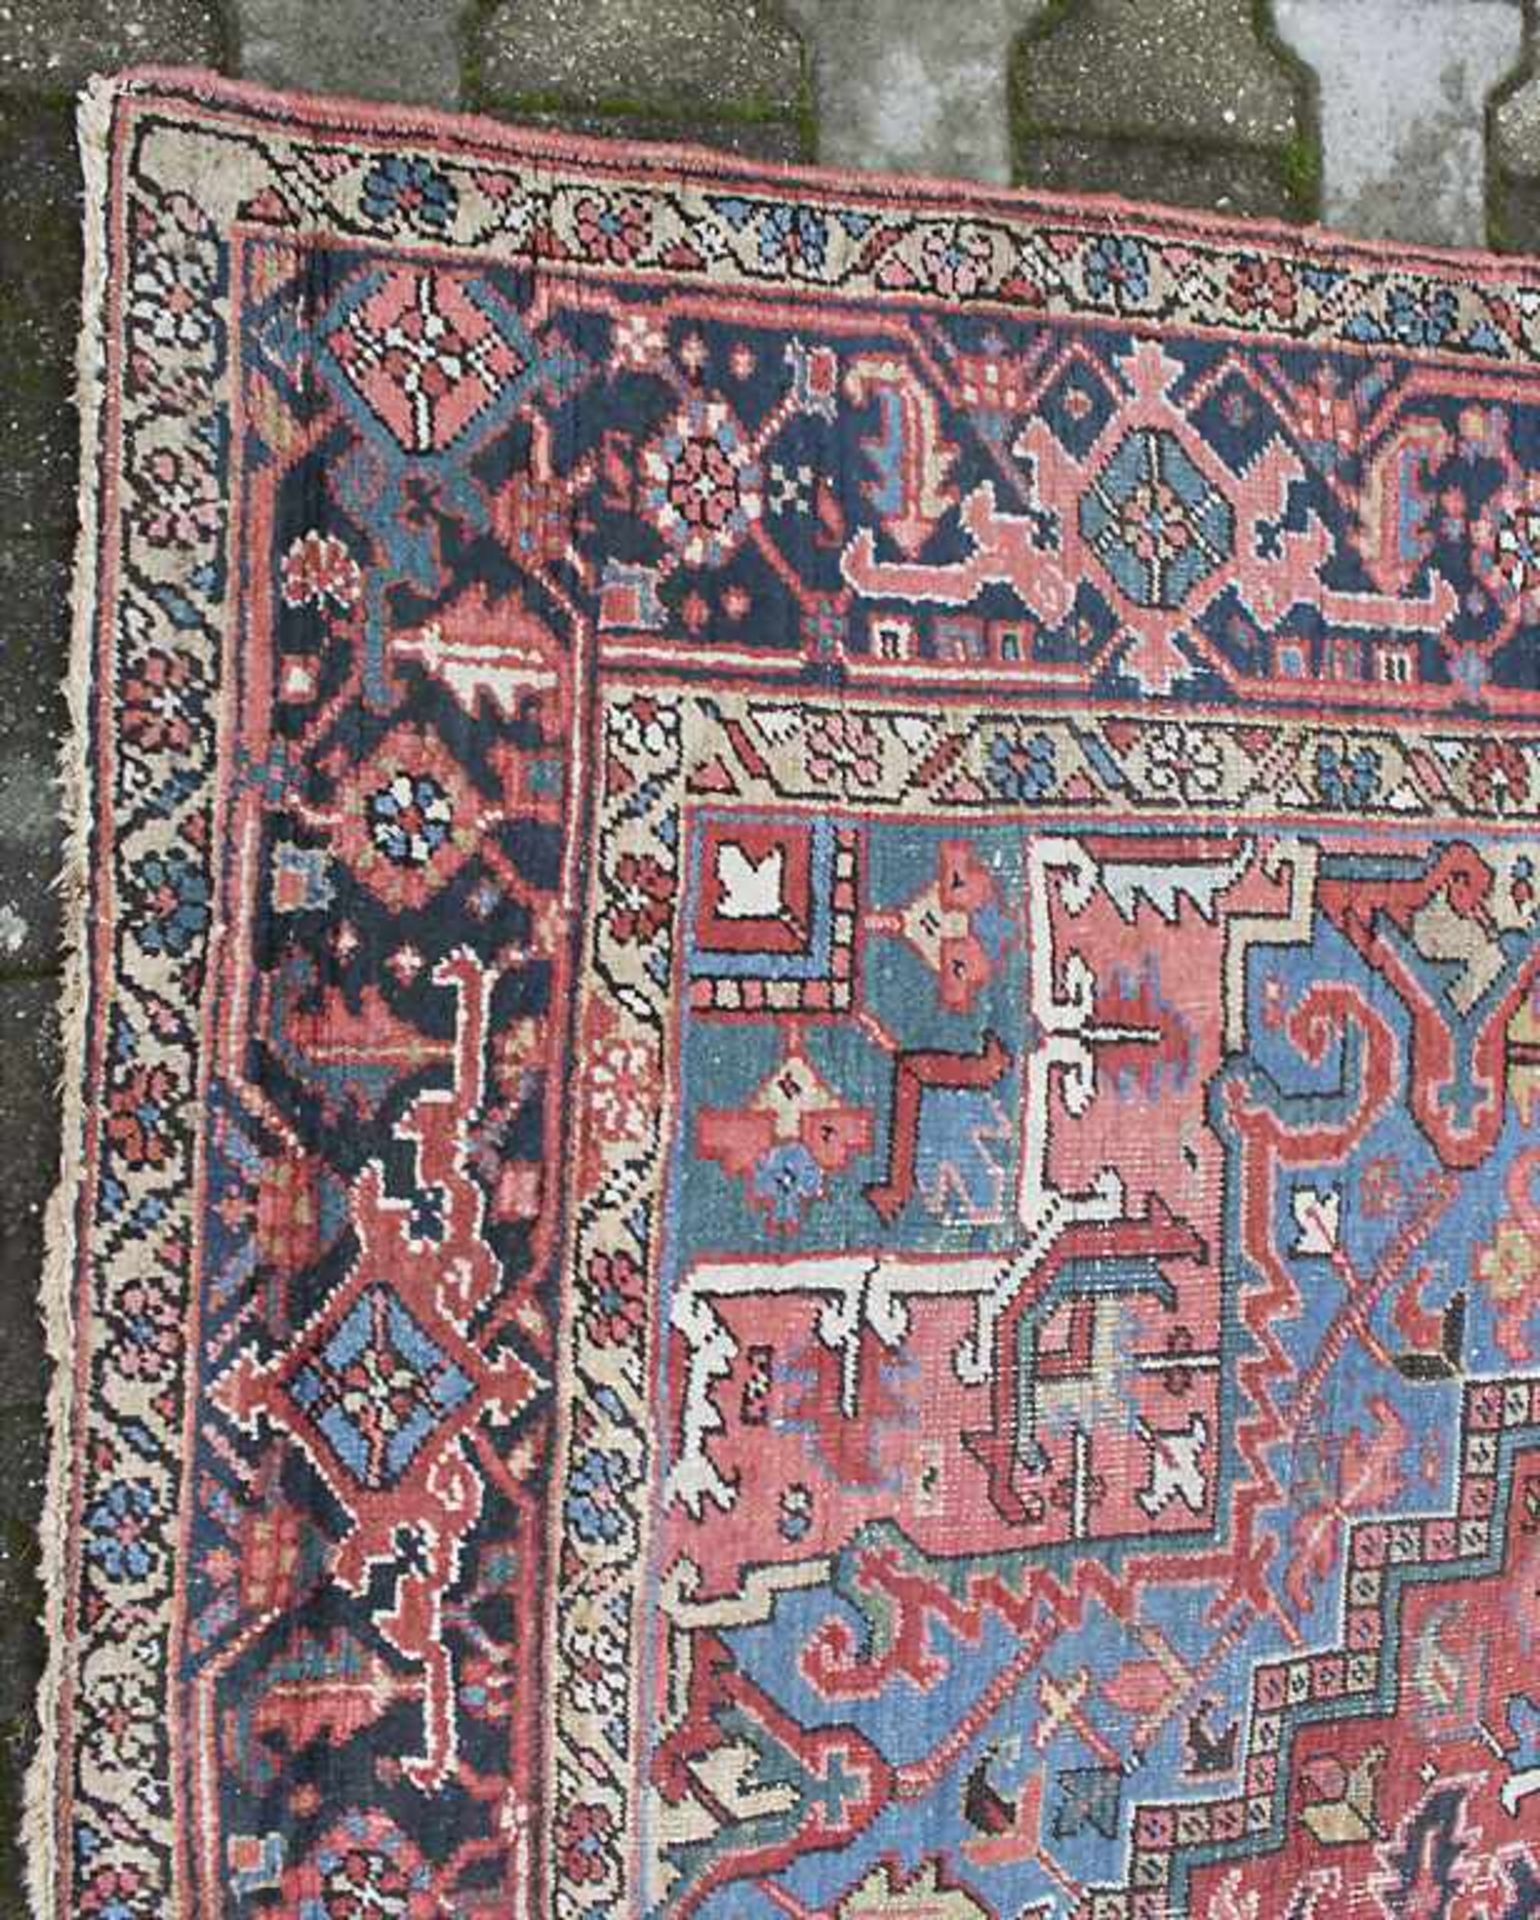 Orientteppich 'Heriz' / An oriental carpet 'Heriz'Material: Wolle, Maße: 330 x 220 cm, Zustand: gut, - Bild 3 aus 4